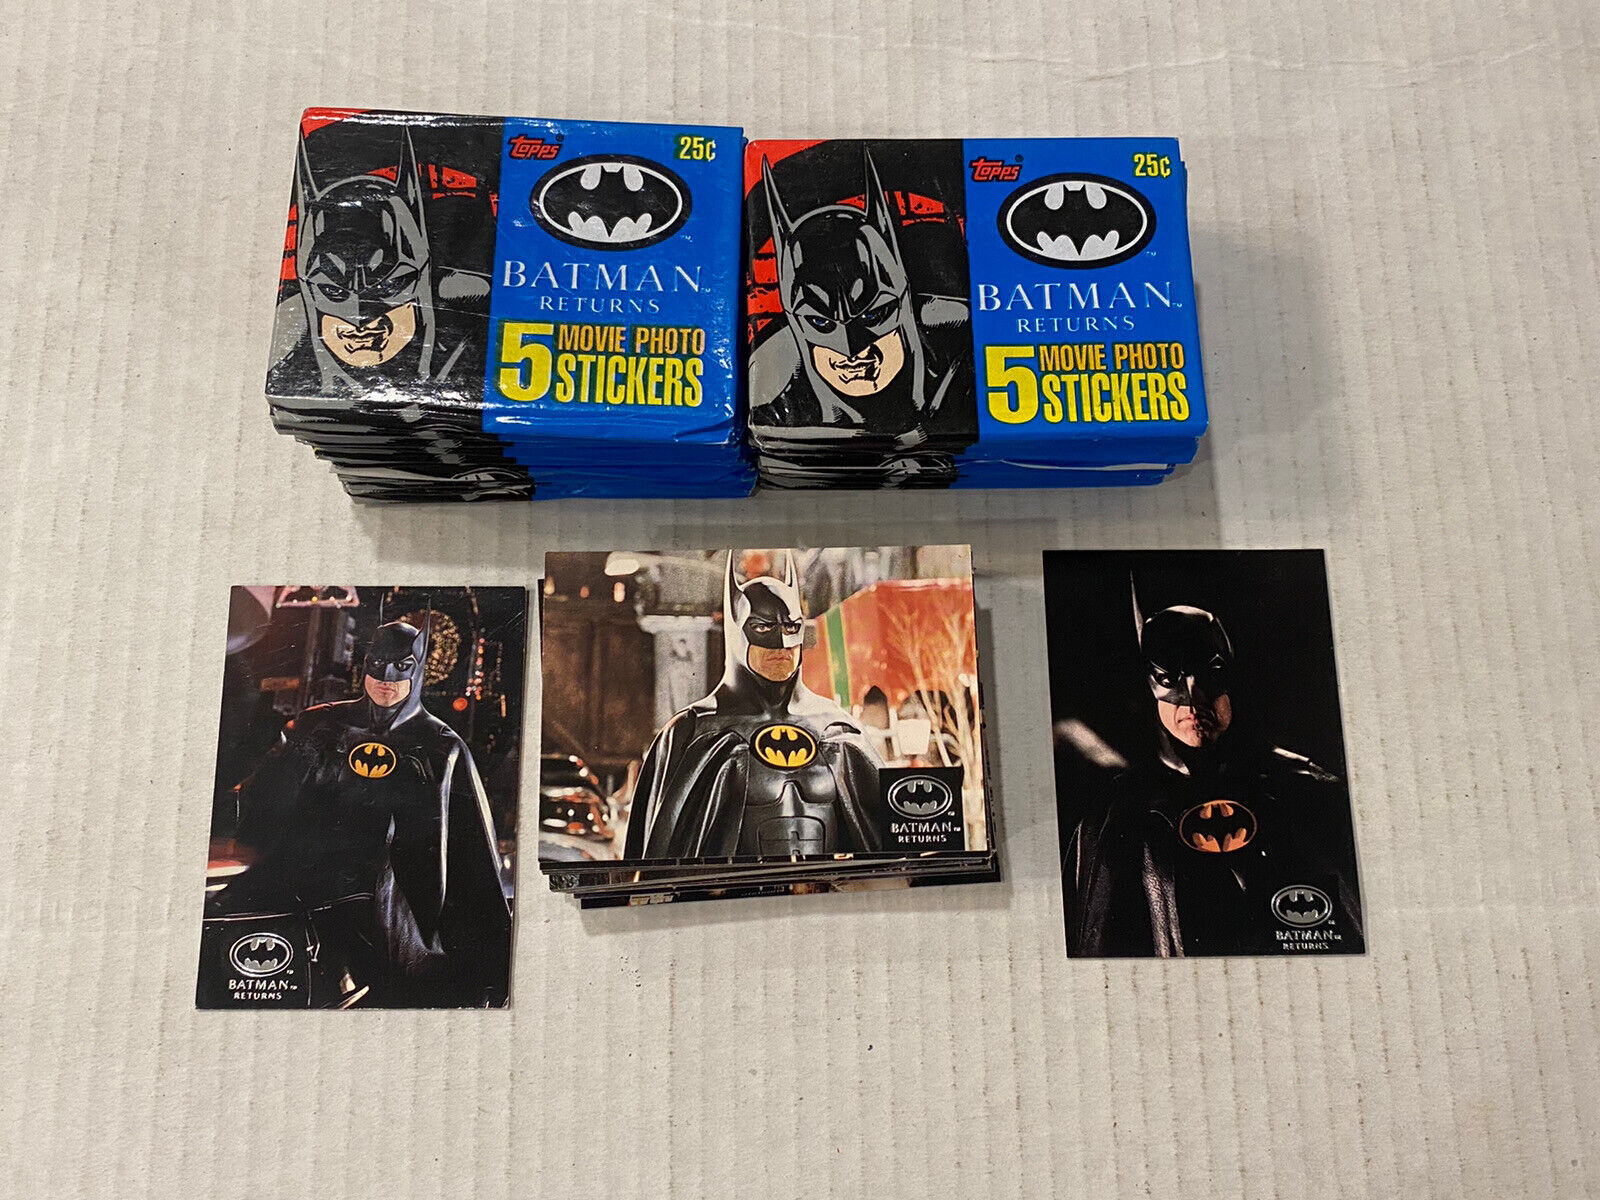 Topps/Topps Stadium Club Batman Returns Lot: 36 Sealed Movie Photo Sticker Packs